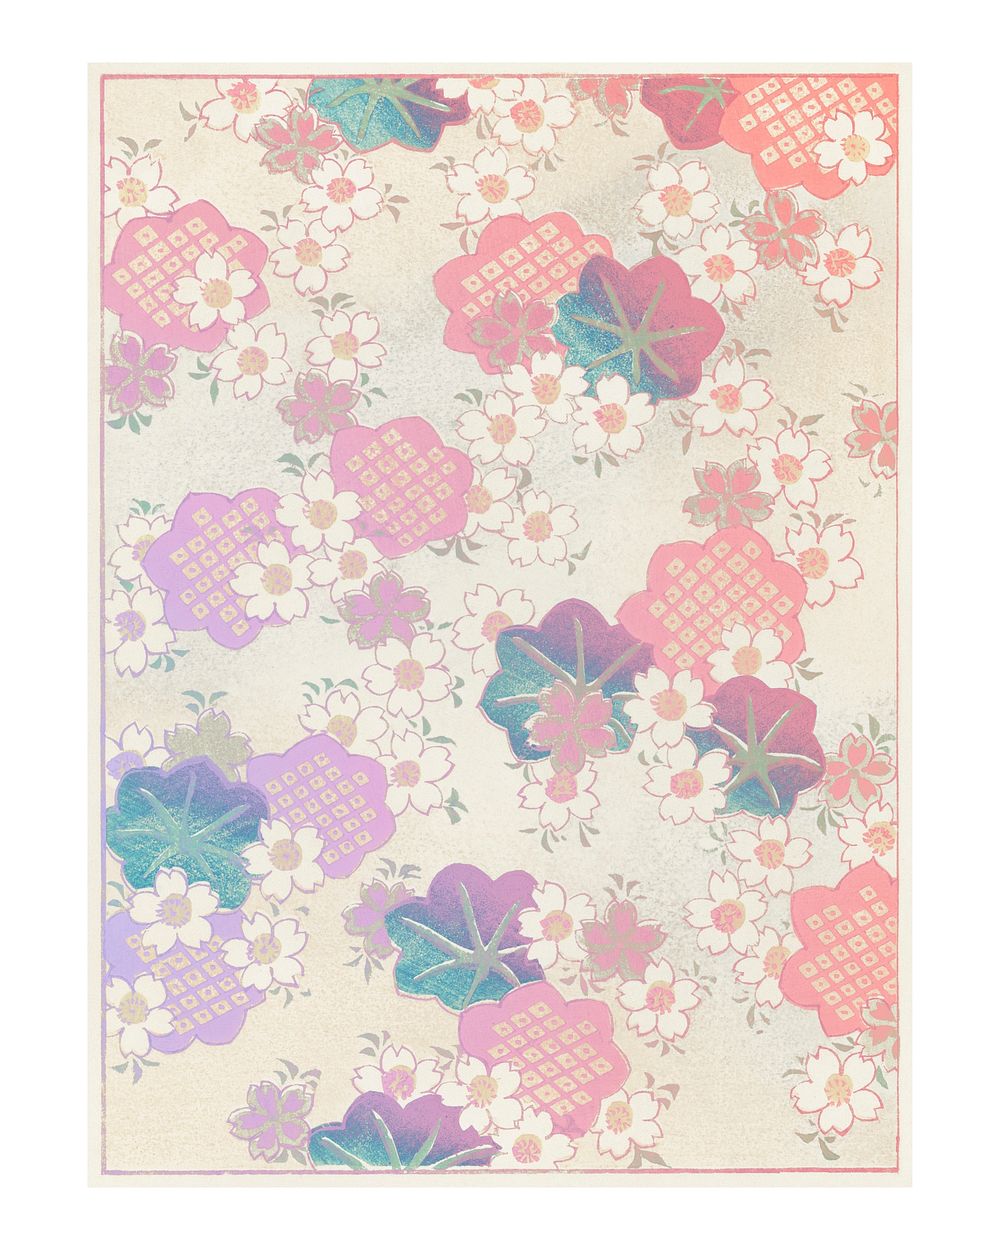 Pastel floral pattern vintage illustration wall art print and poster design remix from original artwork.